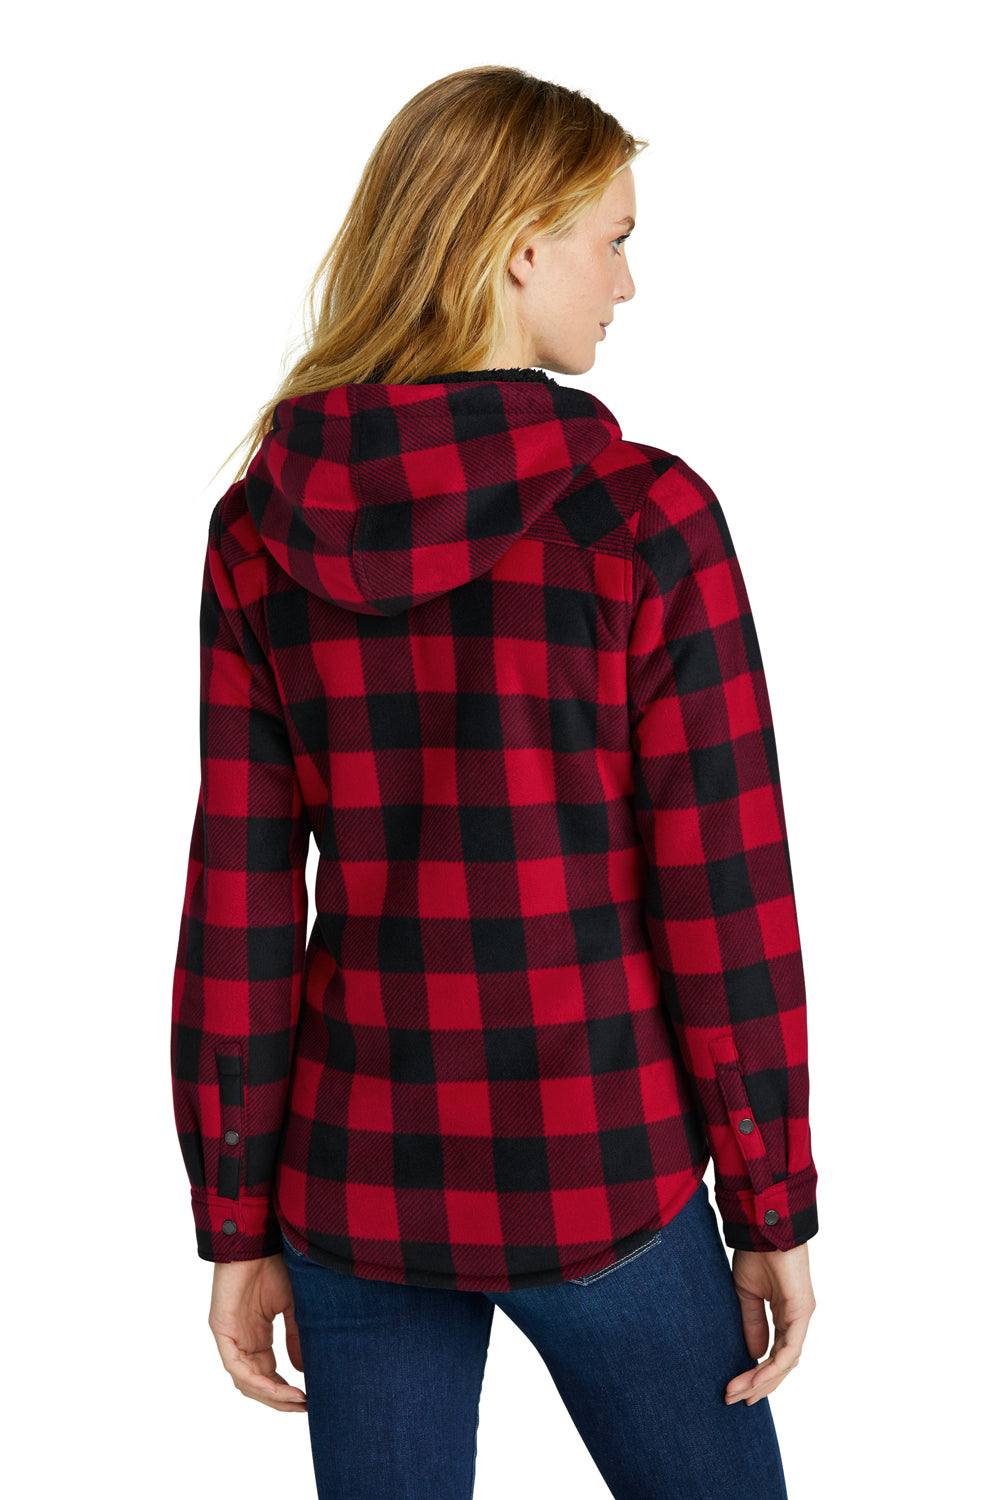 Eddie Bauer EB229 Womens Woodland Snap Front Shirt Jacket w/ Double Pockets Radish Red/Black Model Back